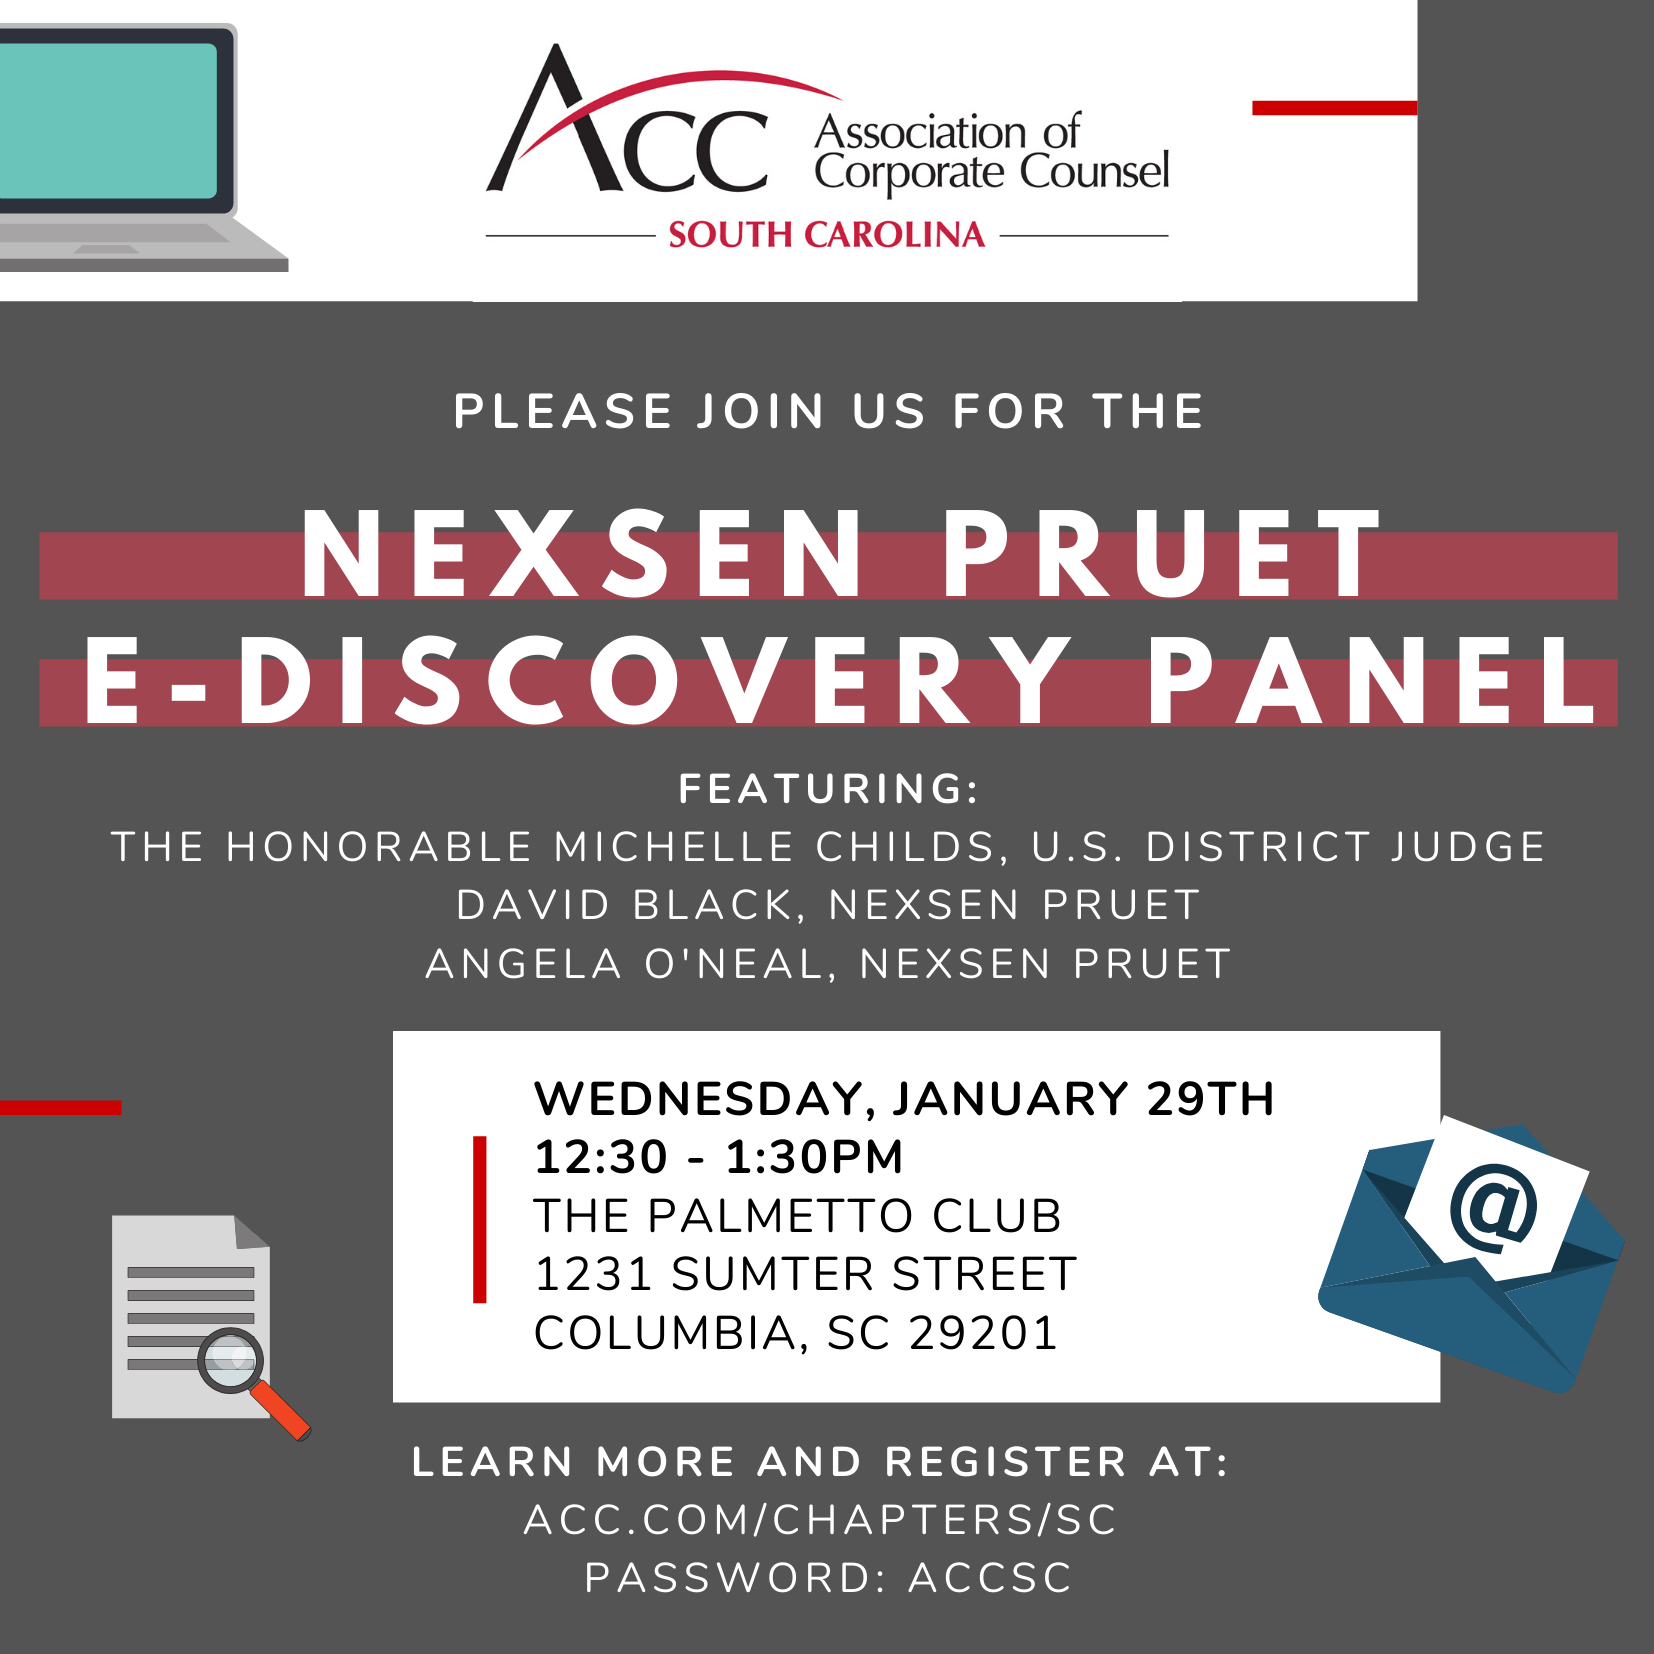 Nexsen Pruet E-Discovery Panel - January 29, 2020